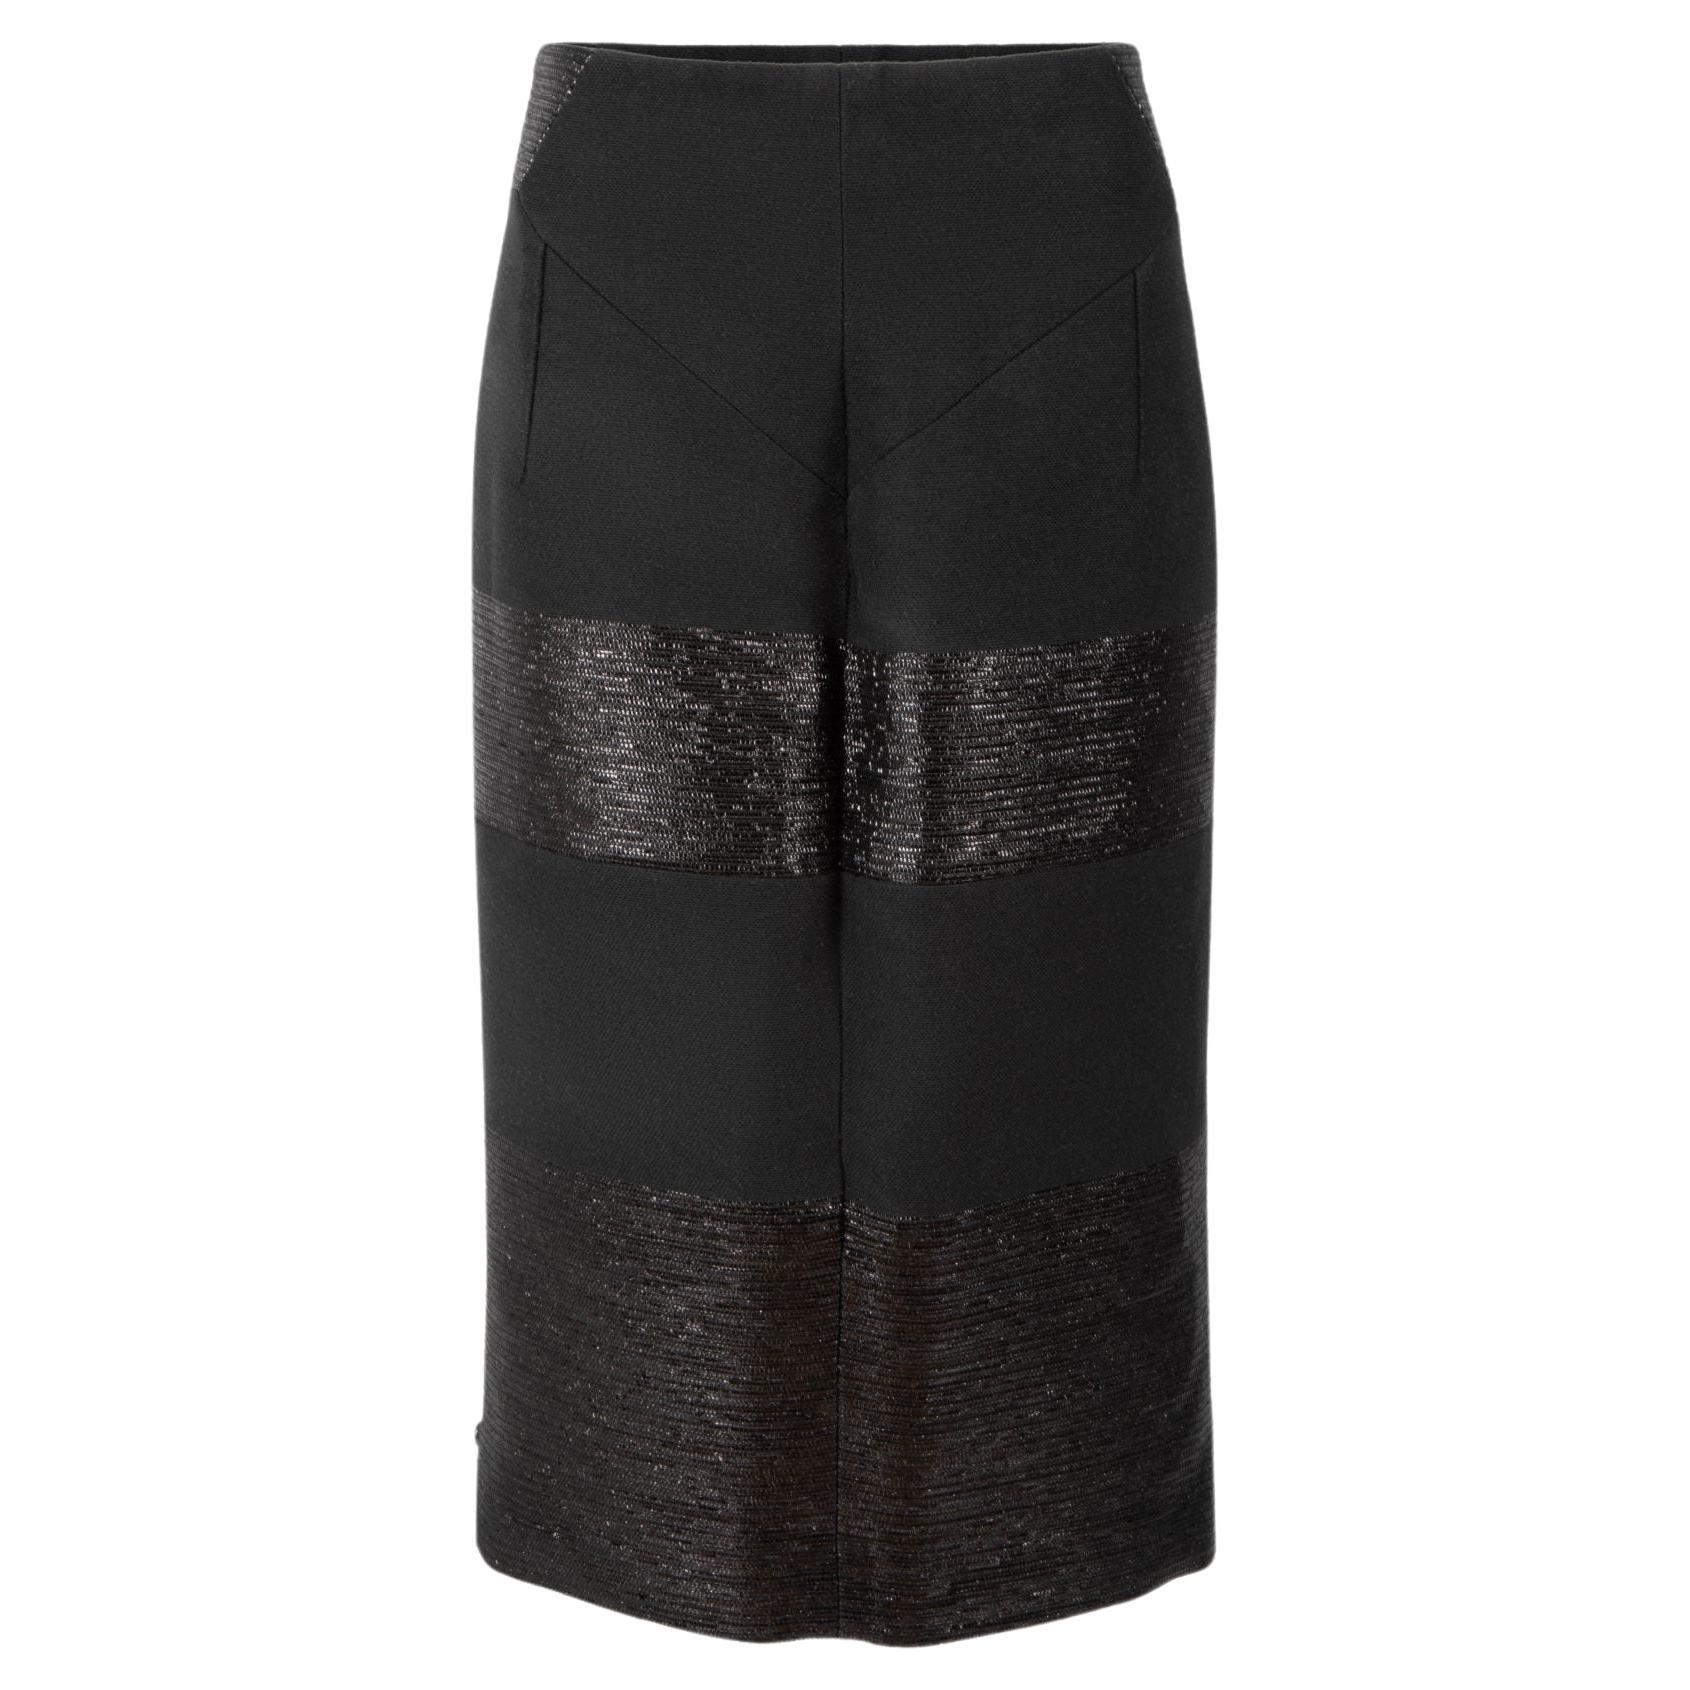 Amanda Wakeley Black Textured Pencil Skirt Size XL For Sale